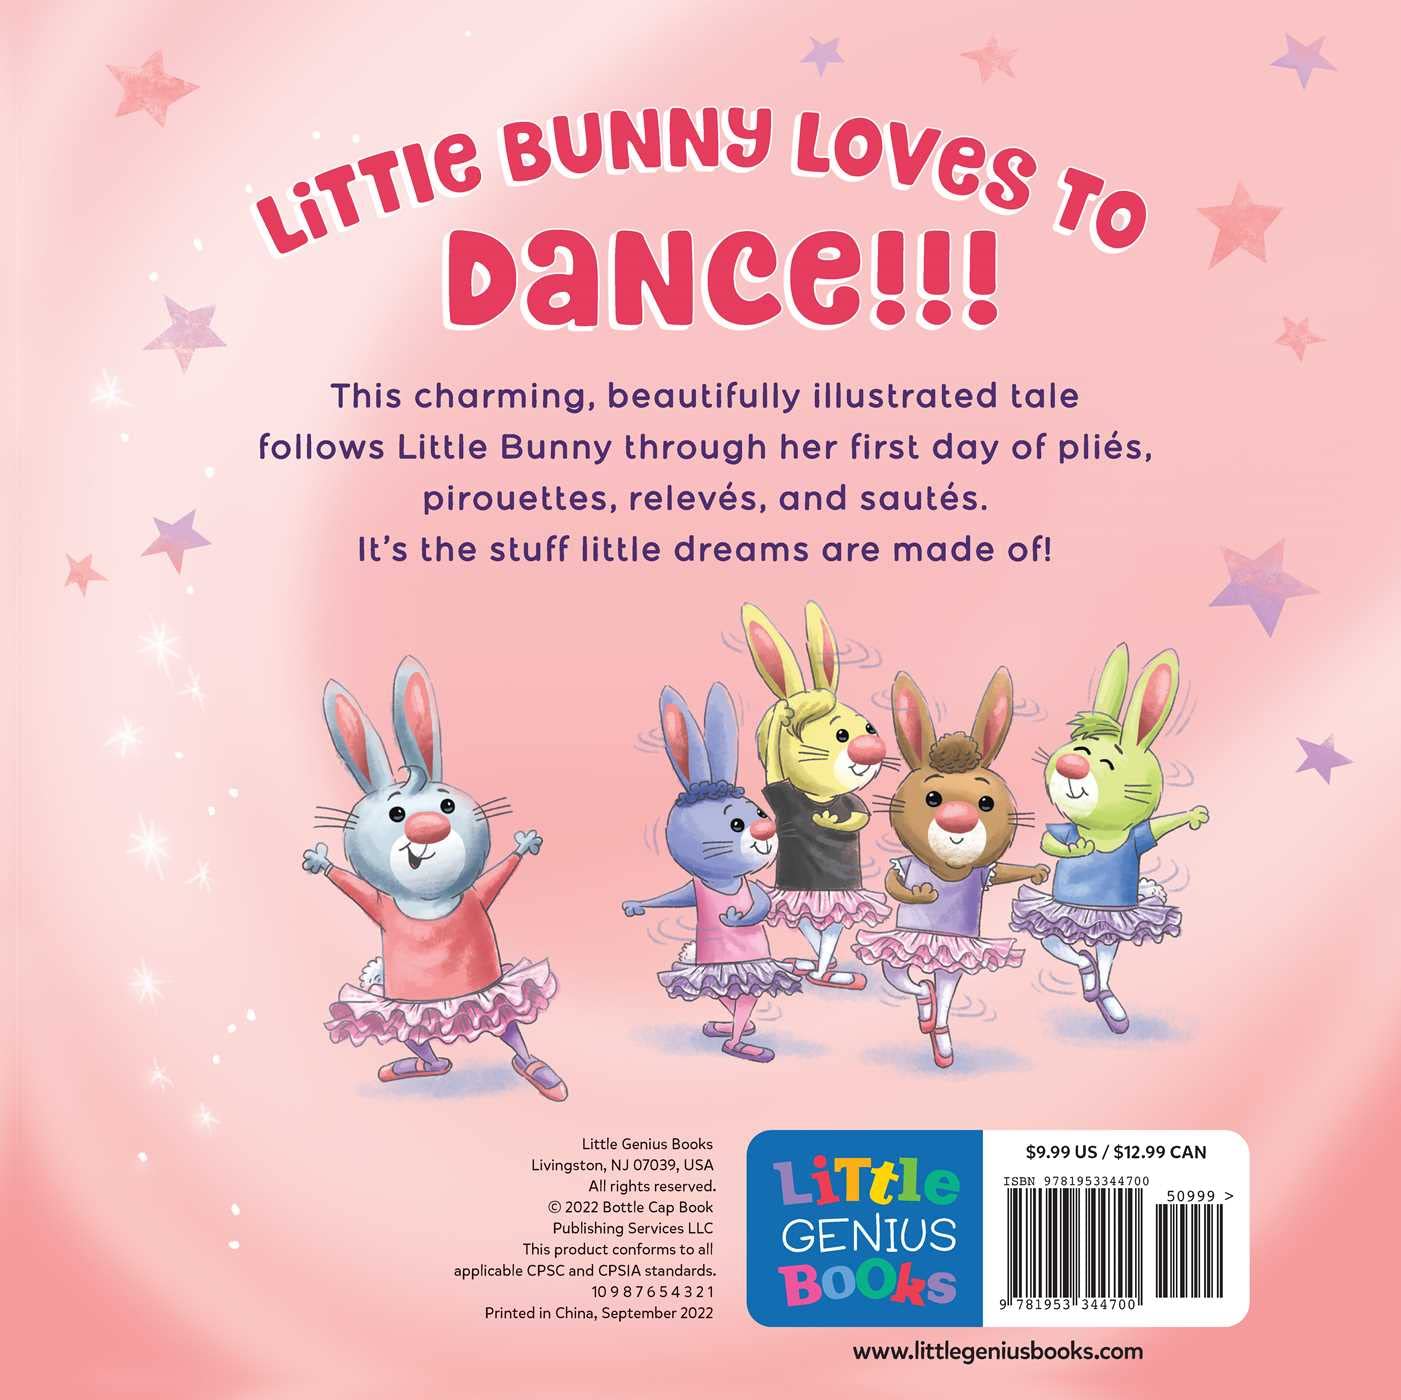 Ballet Bunny Hardcover Book - Twinkle Twinkle Little One